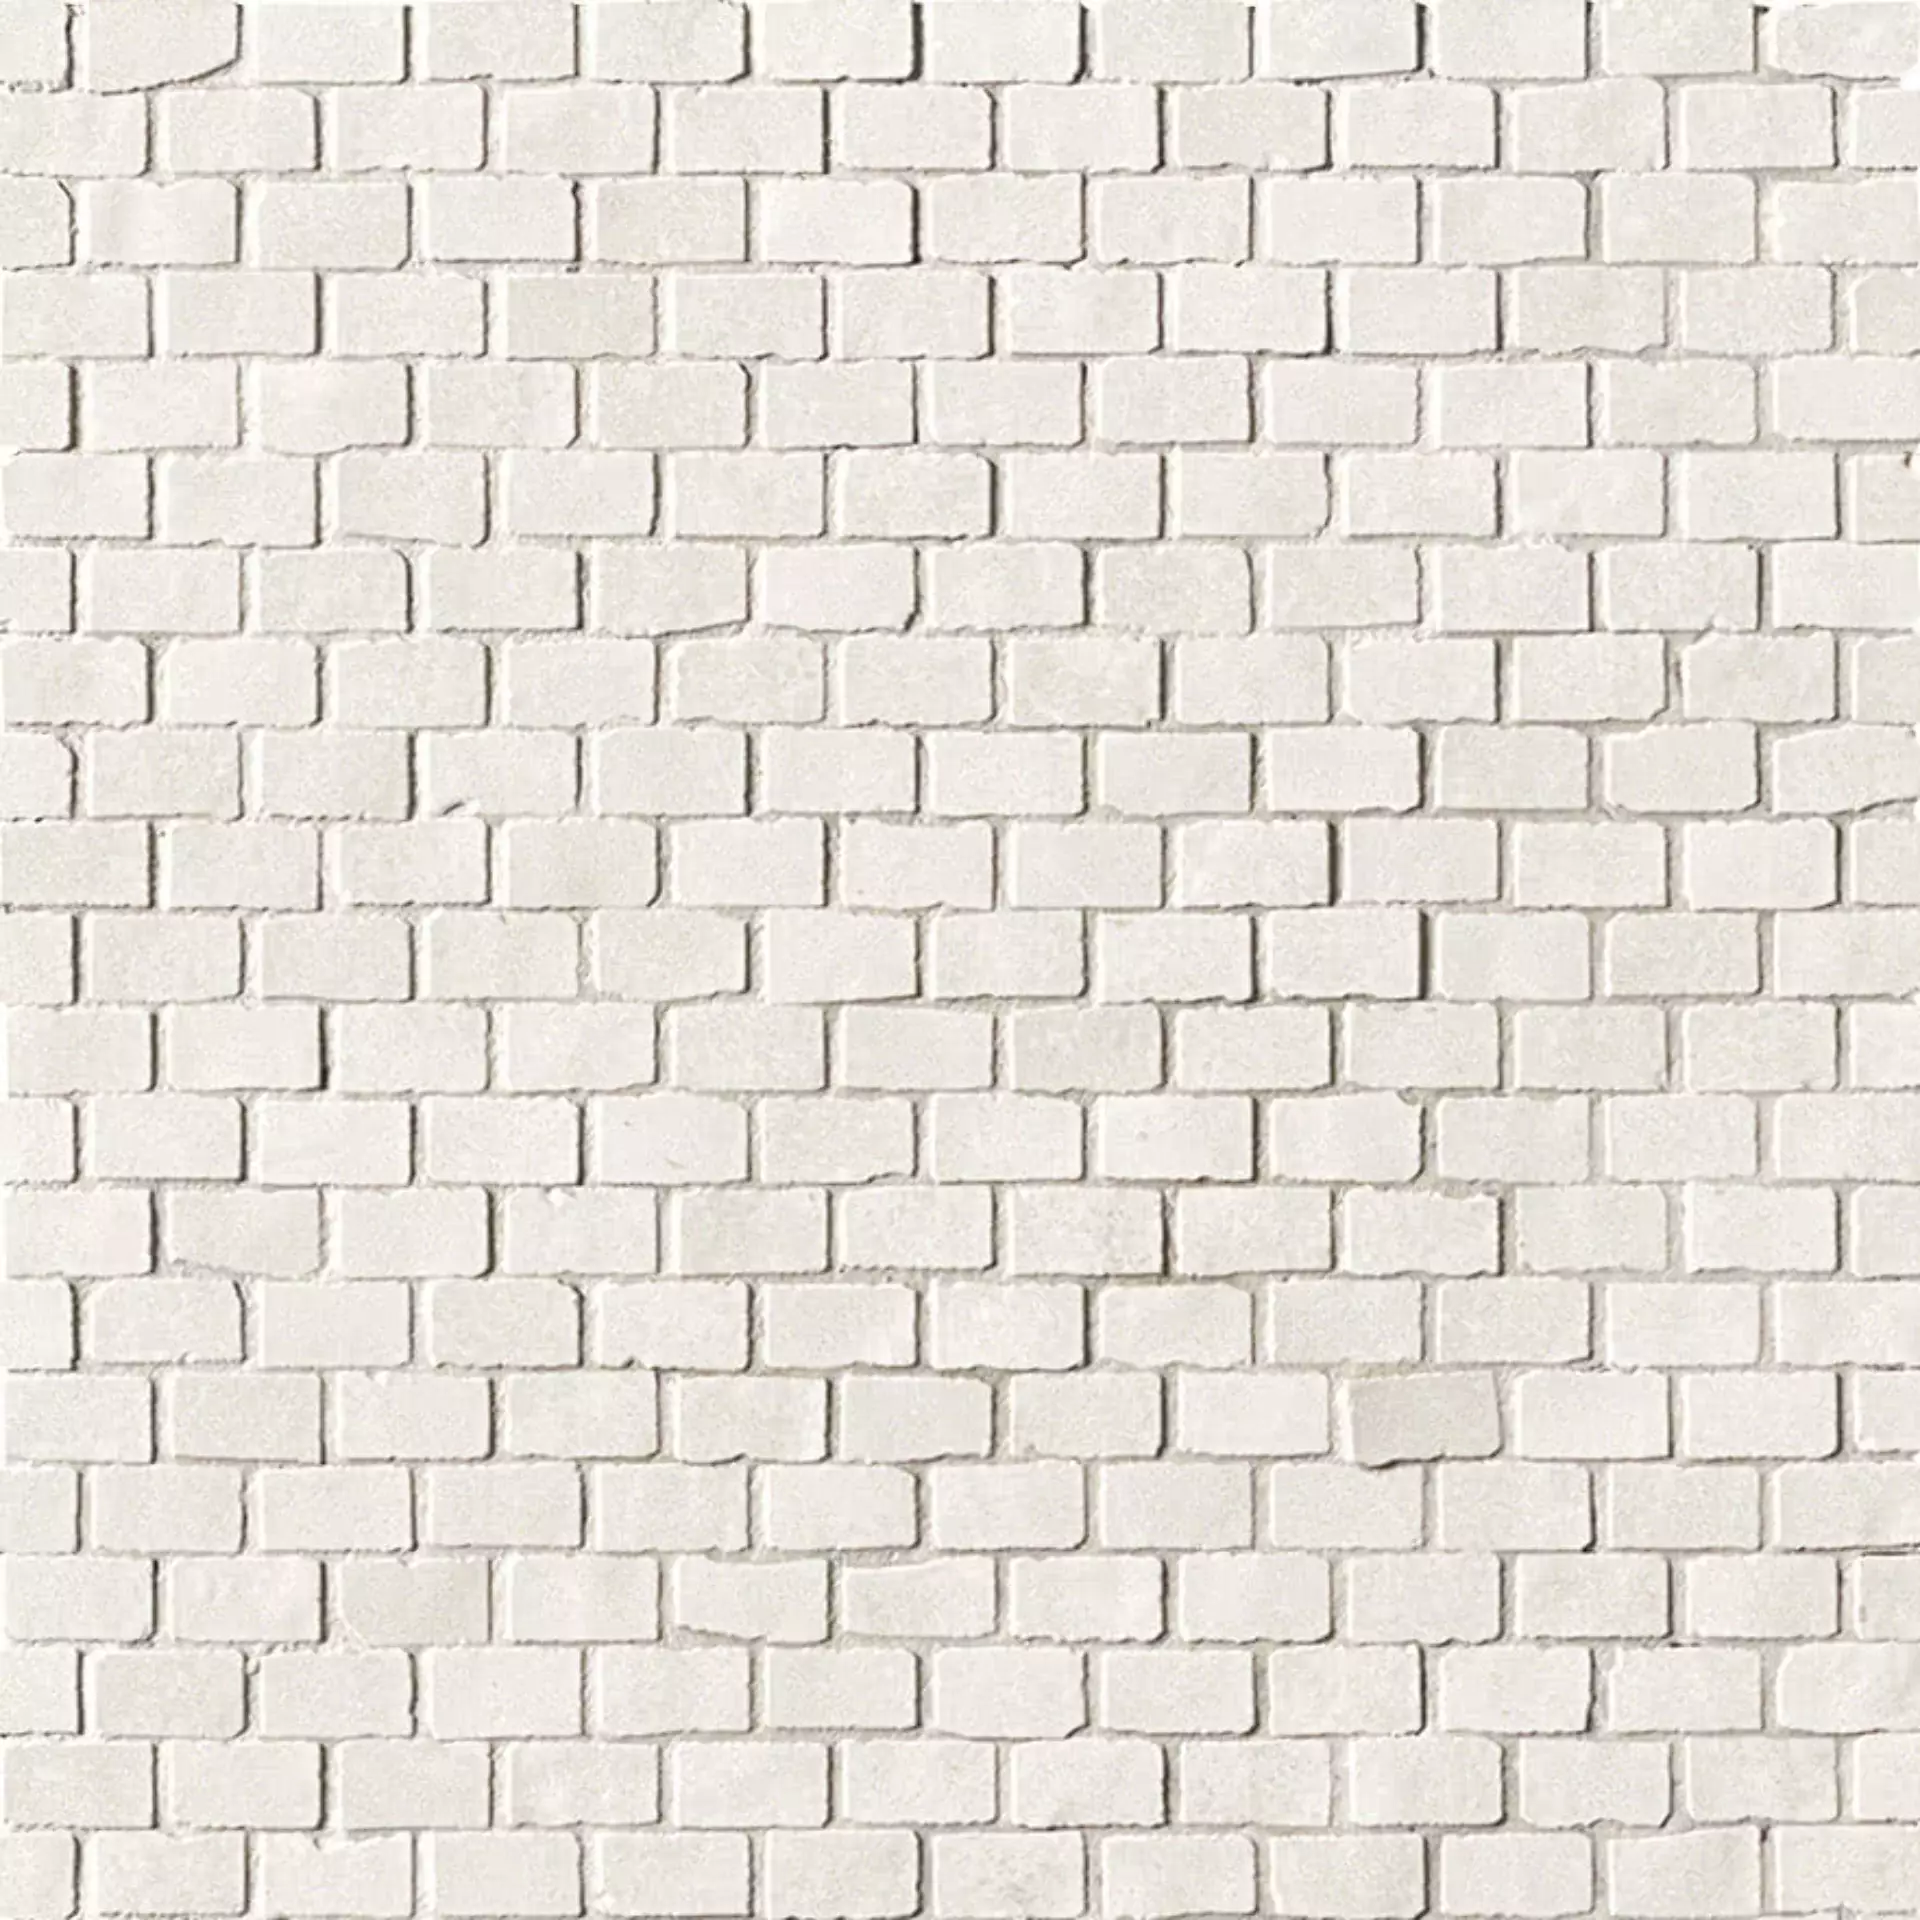 FAP Maku Light Anticato Mosaic Brick fMJ7 30,5x30,5cm